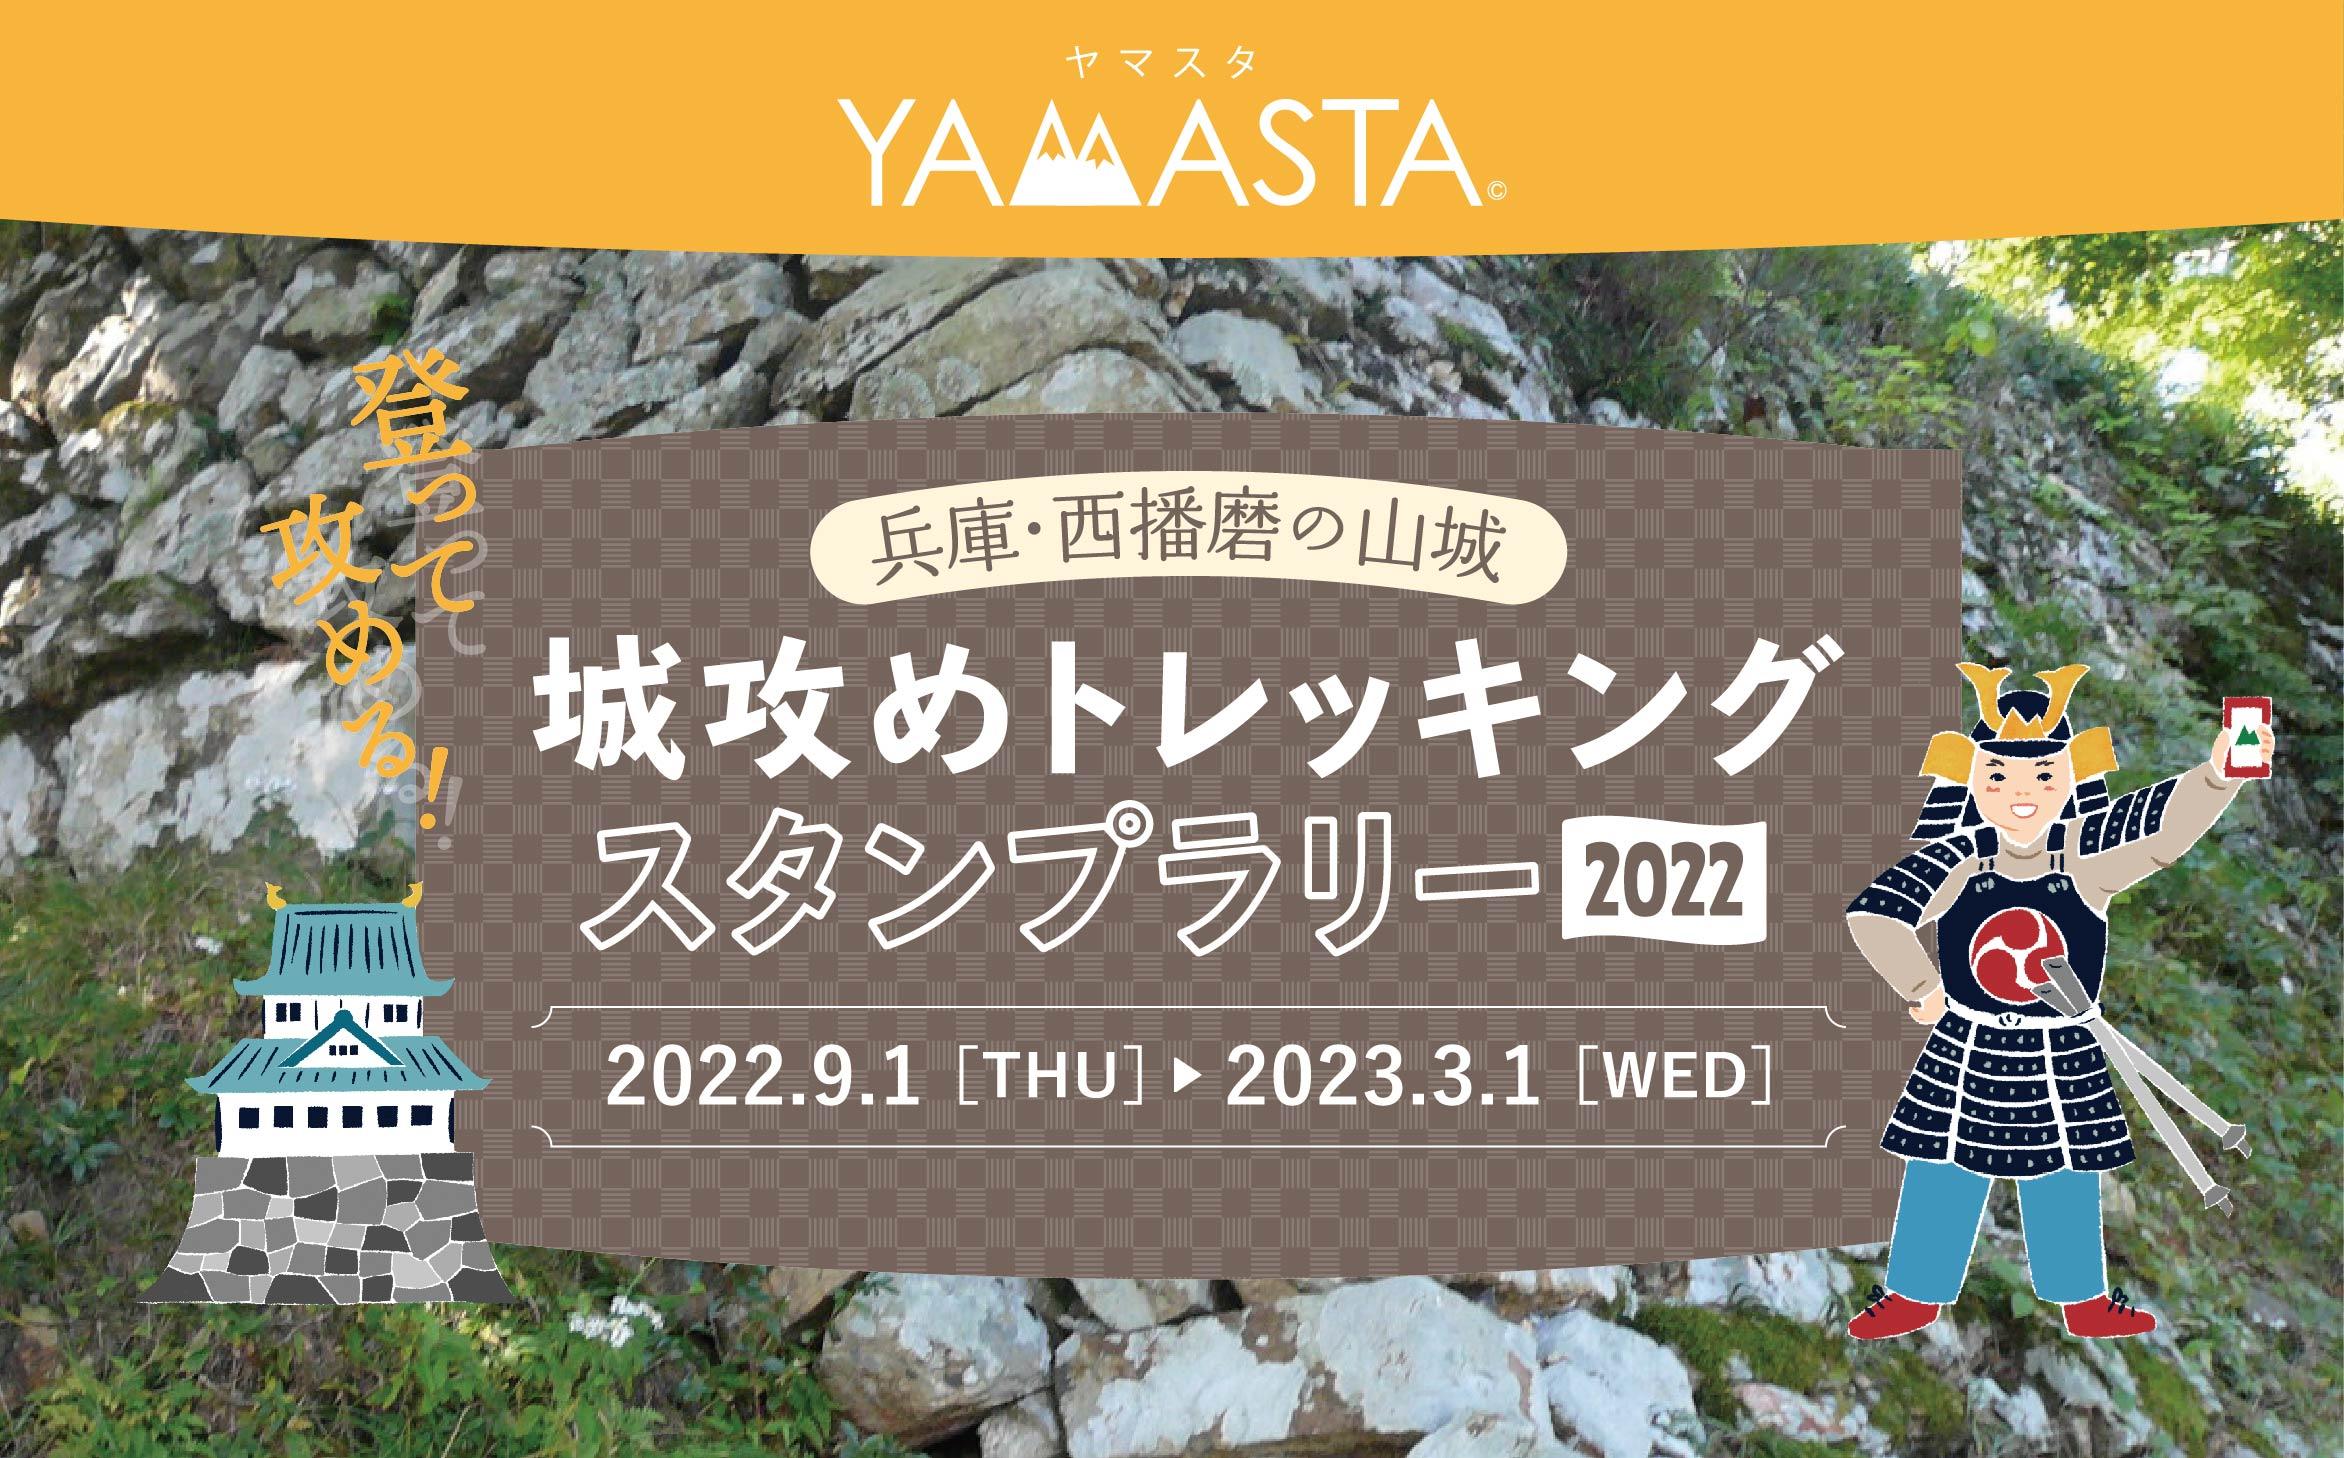 20220831_yamasta_01.jpg